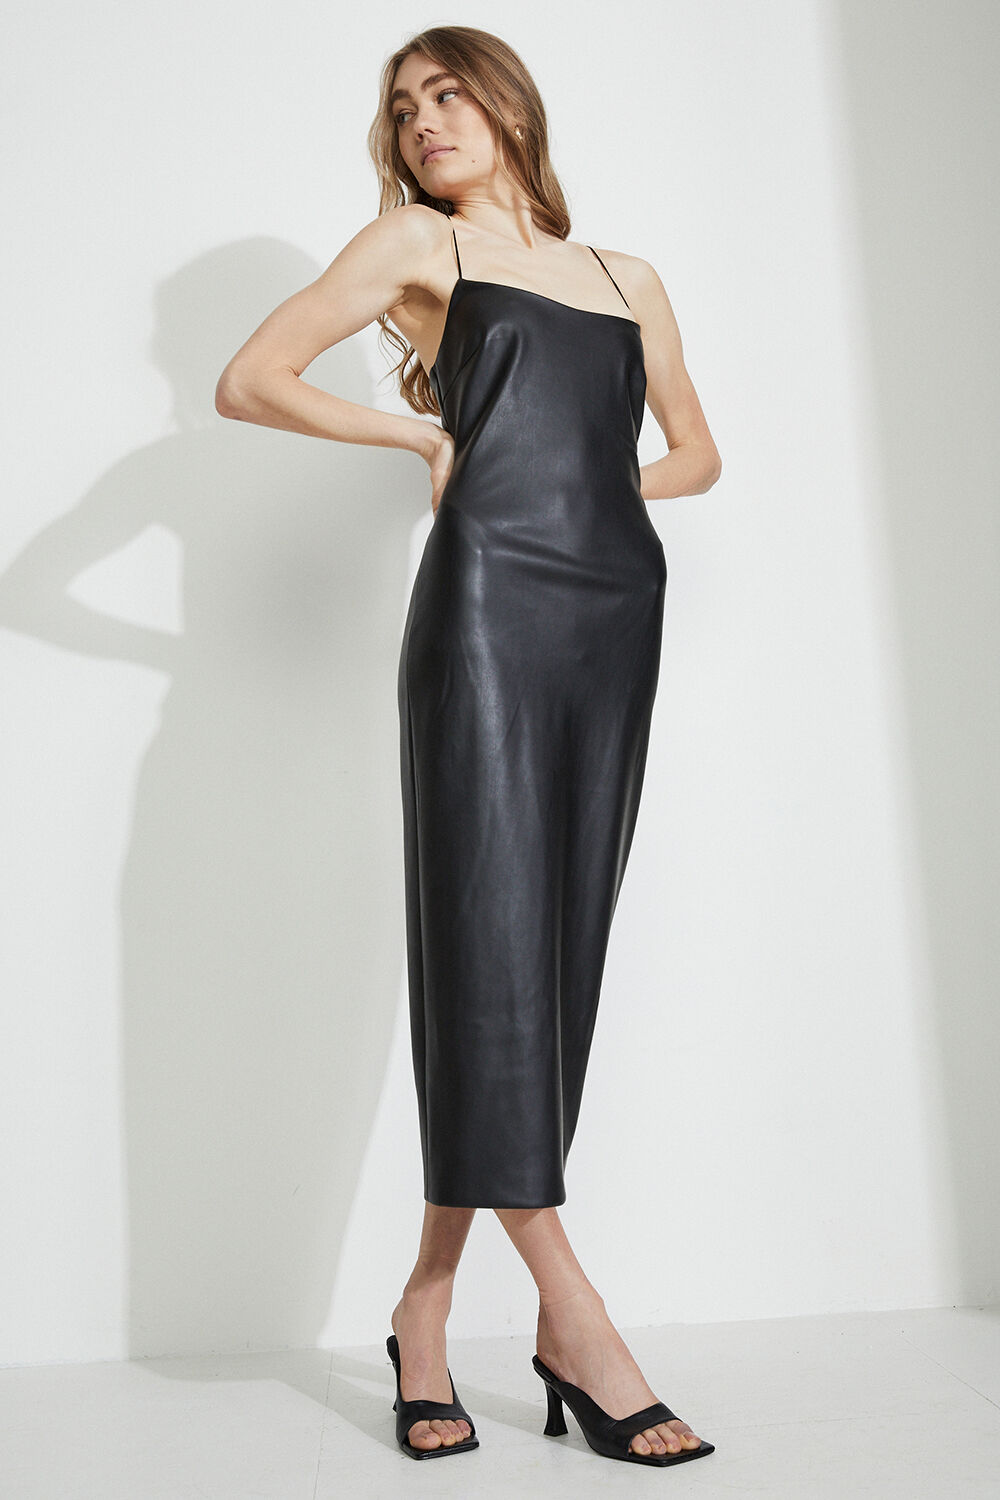 Helena Vegan Leather Dress in Black